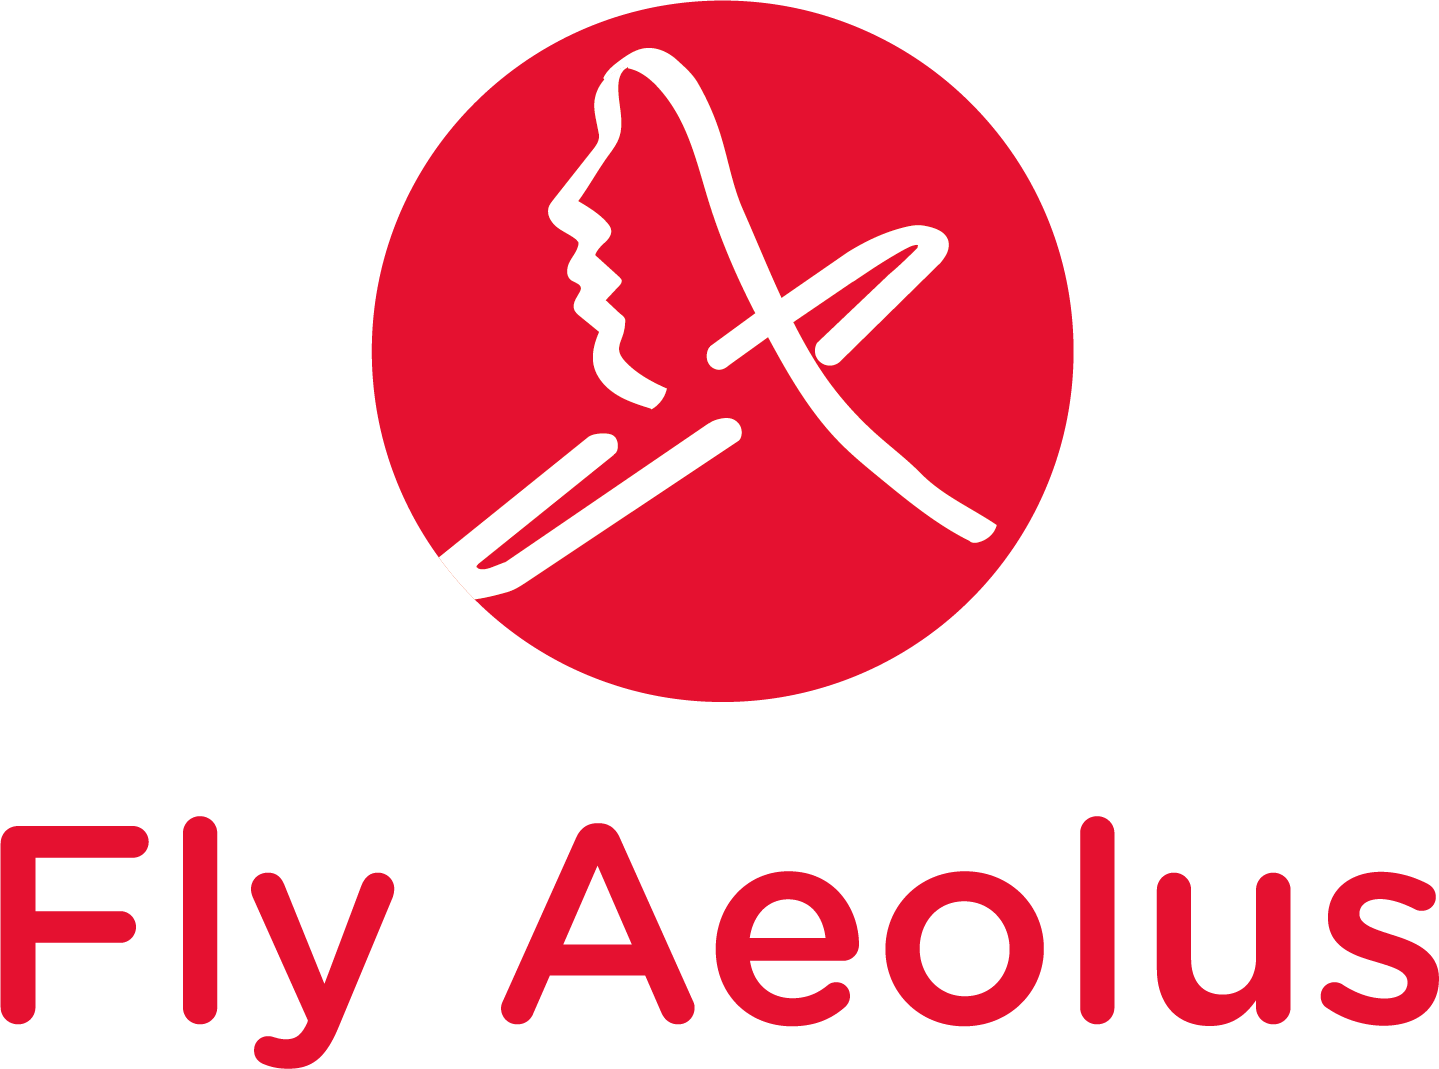 Fly Aeolus